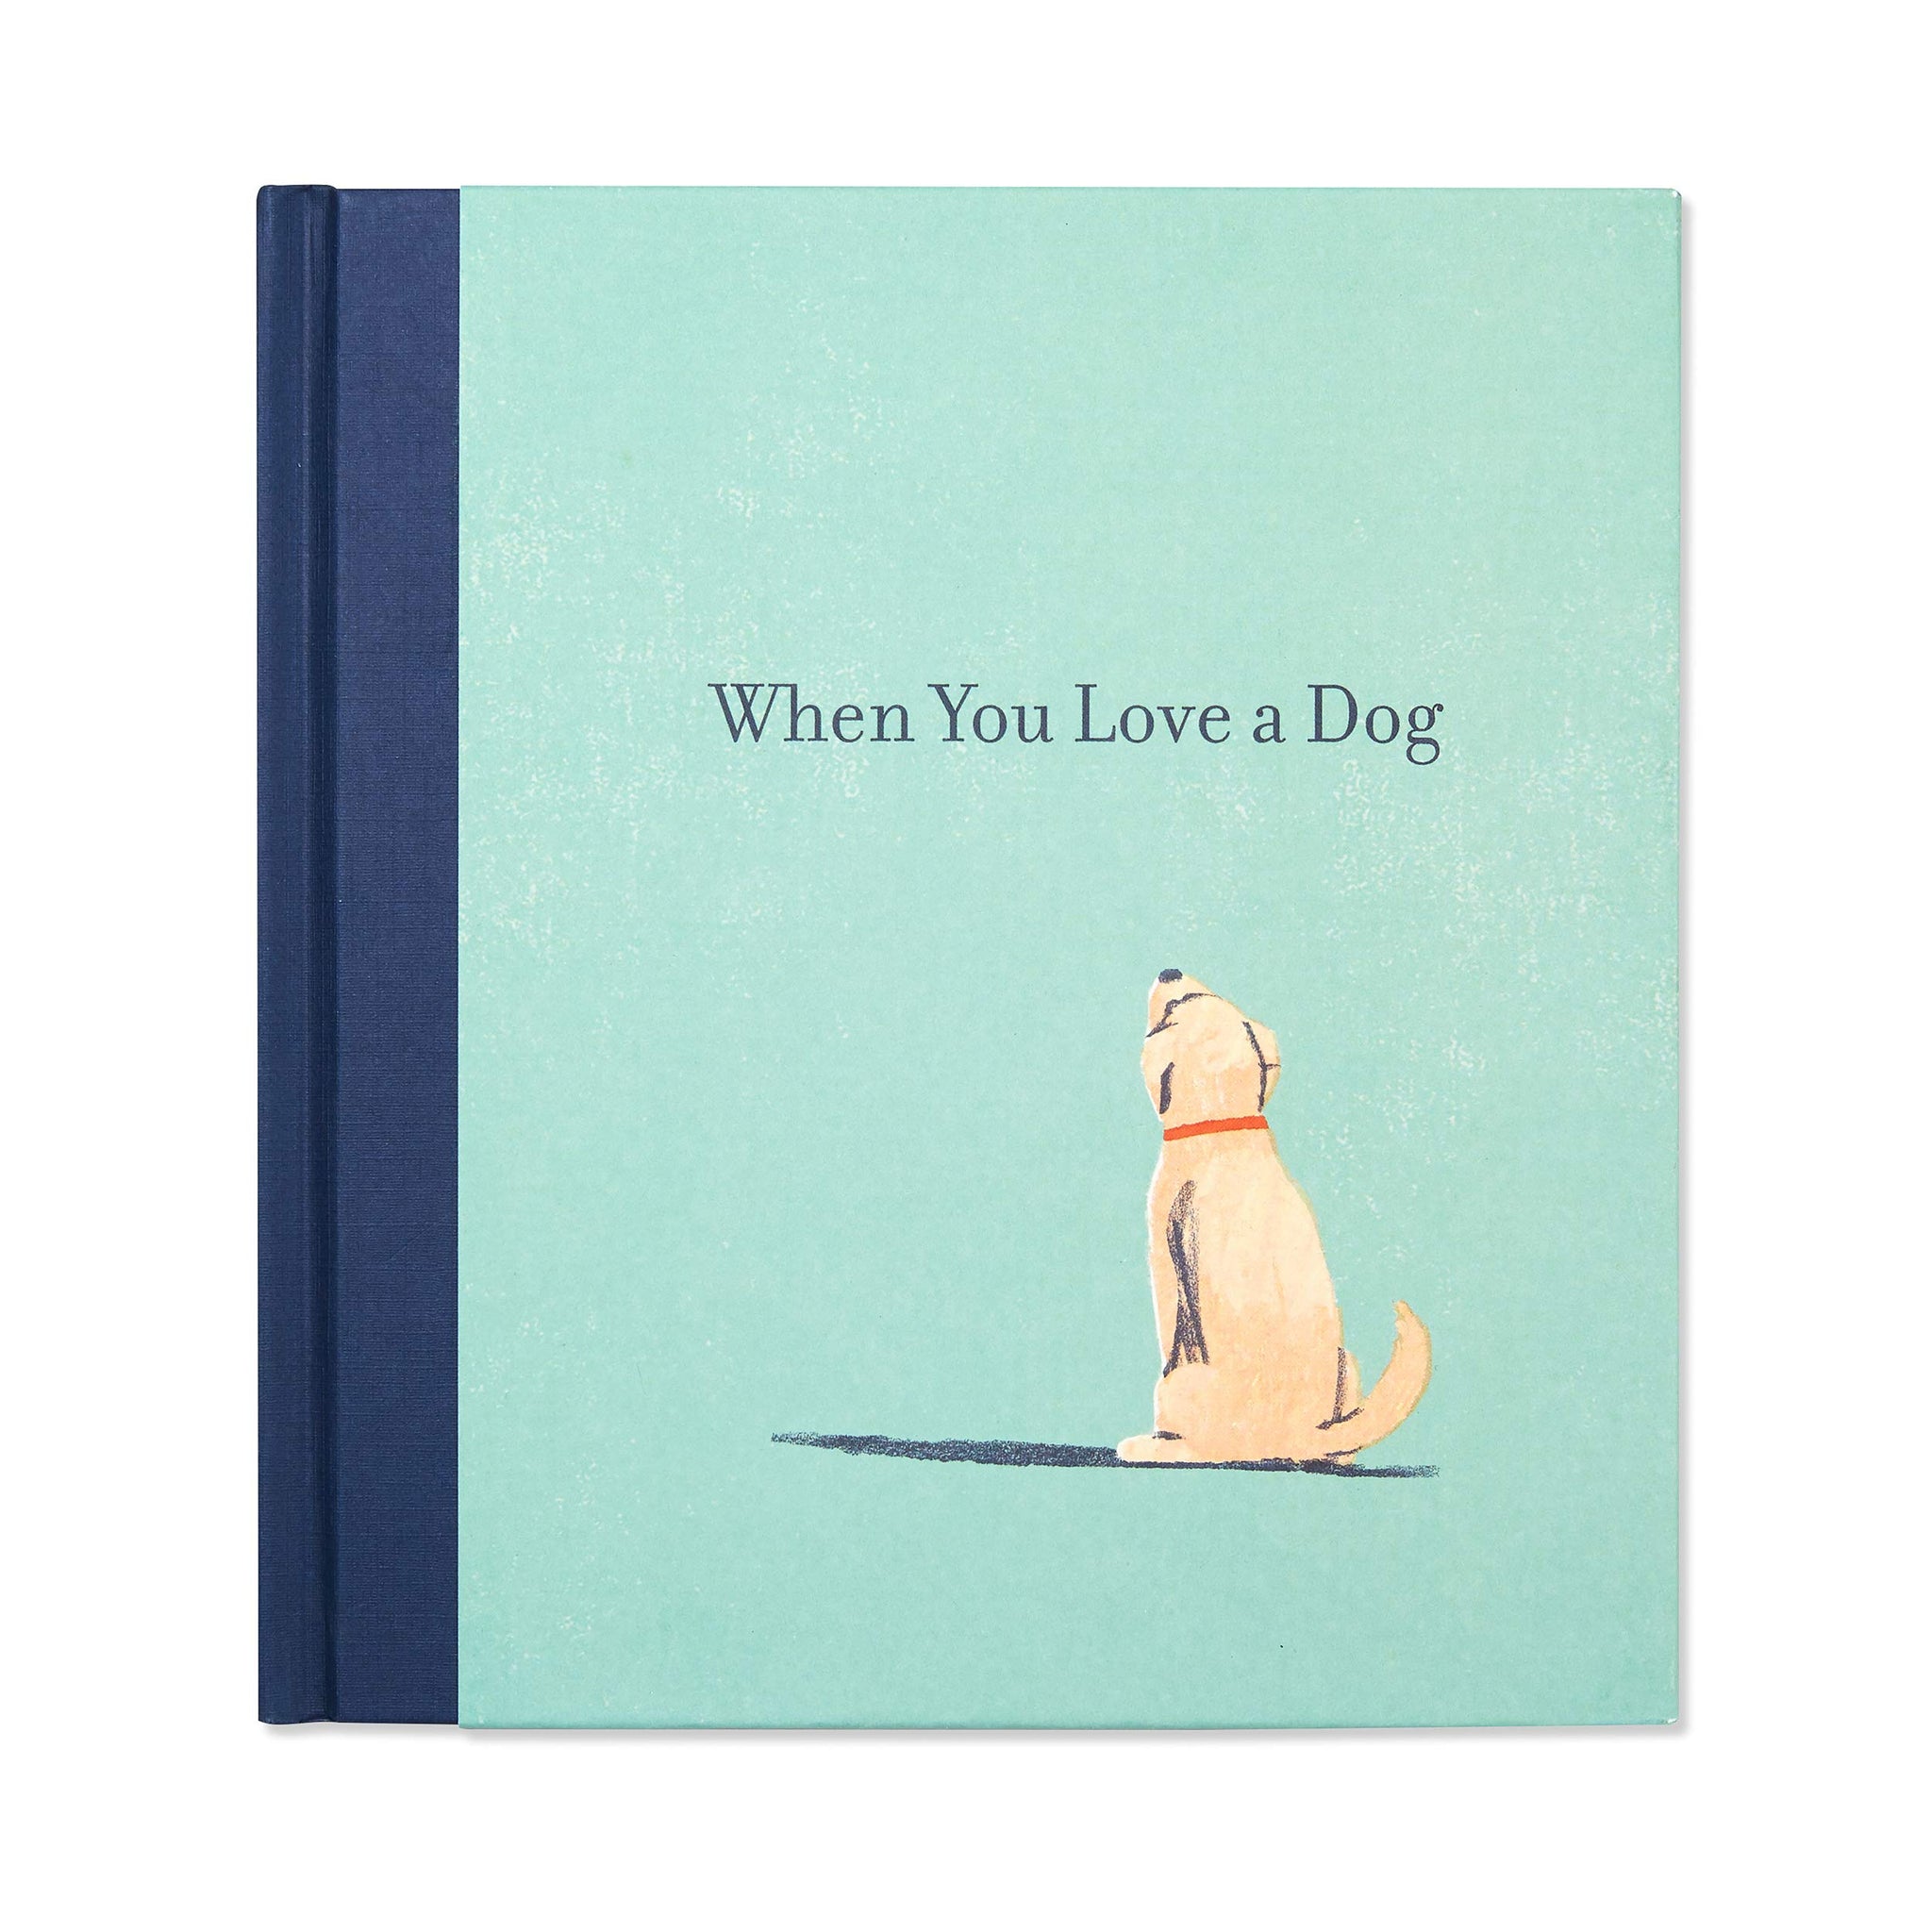 "When you love a dog" Book